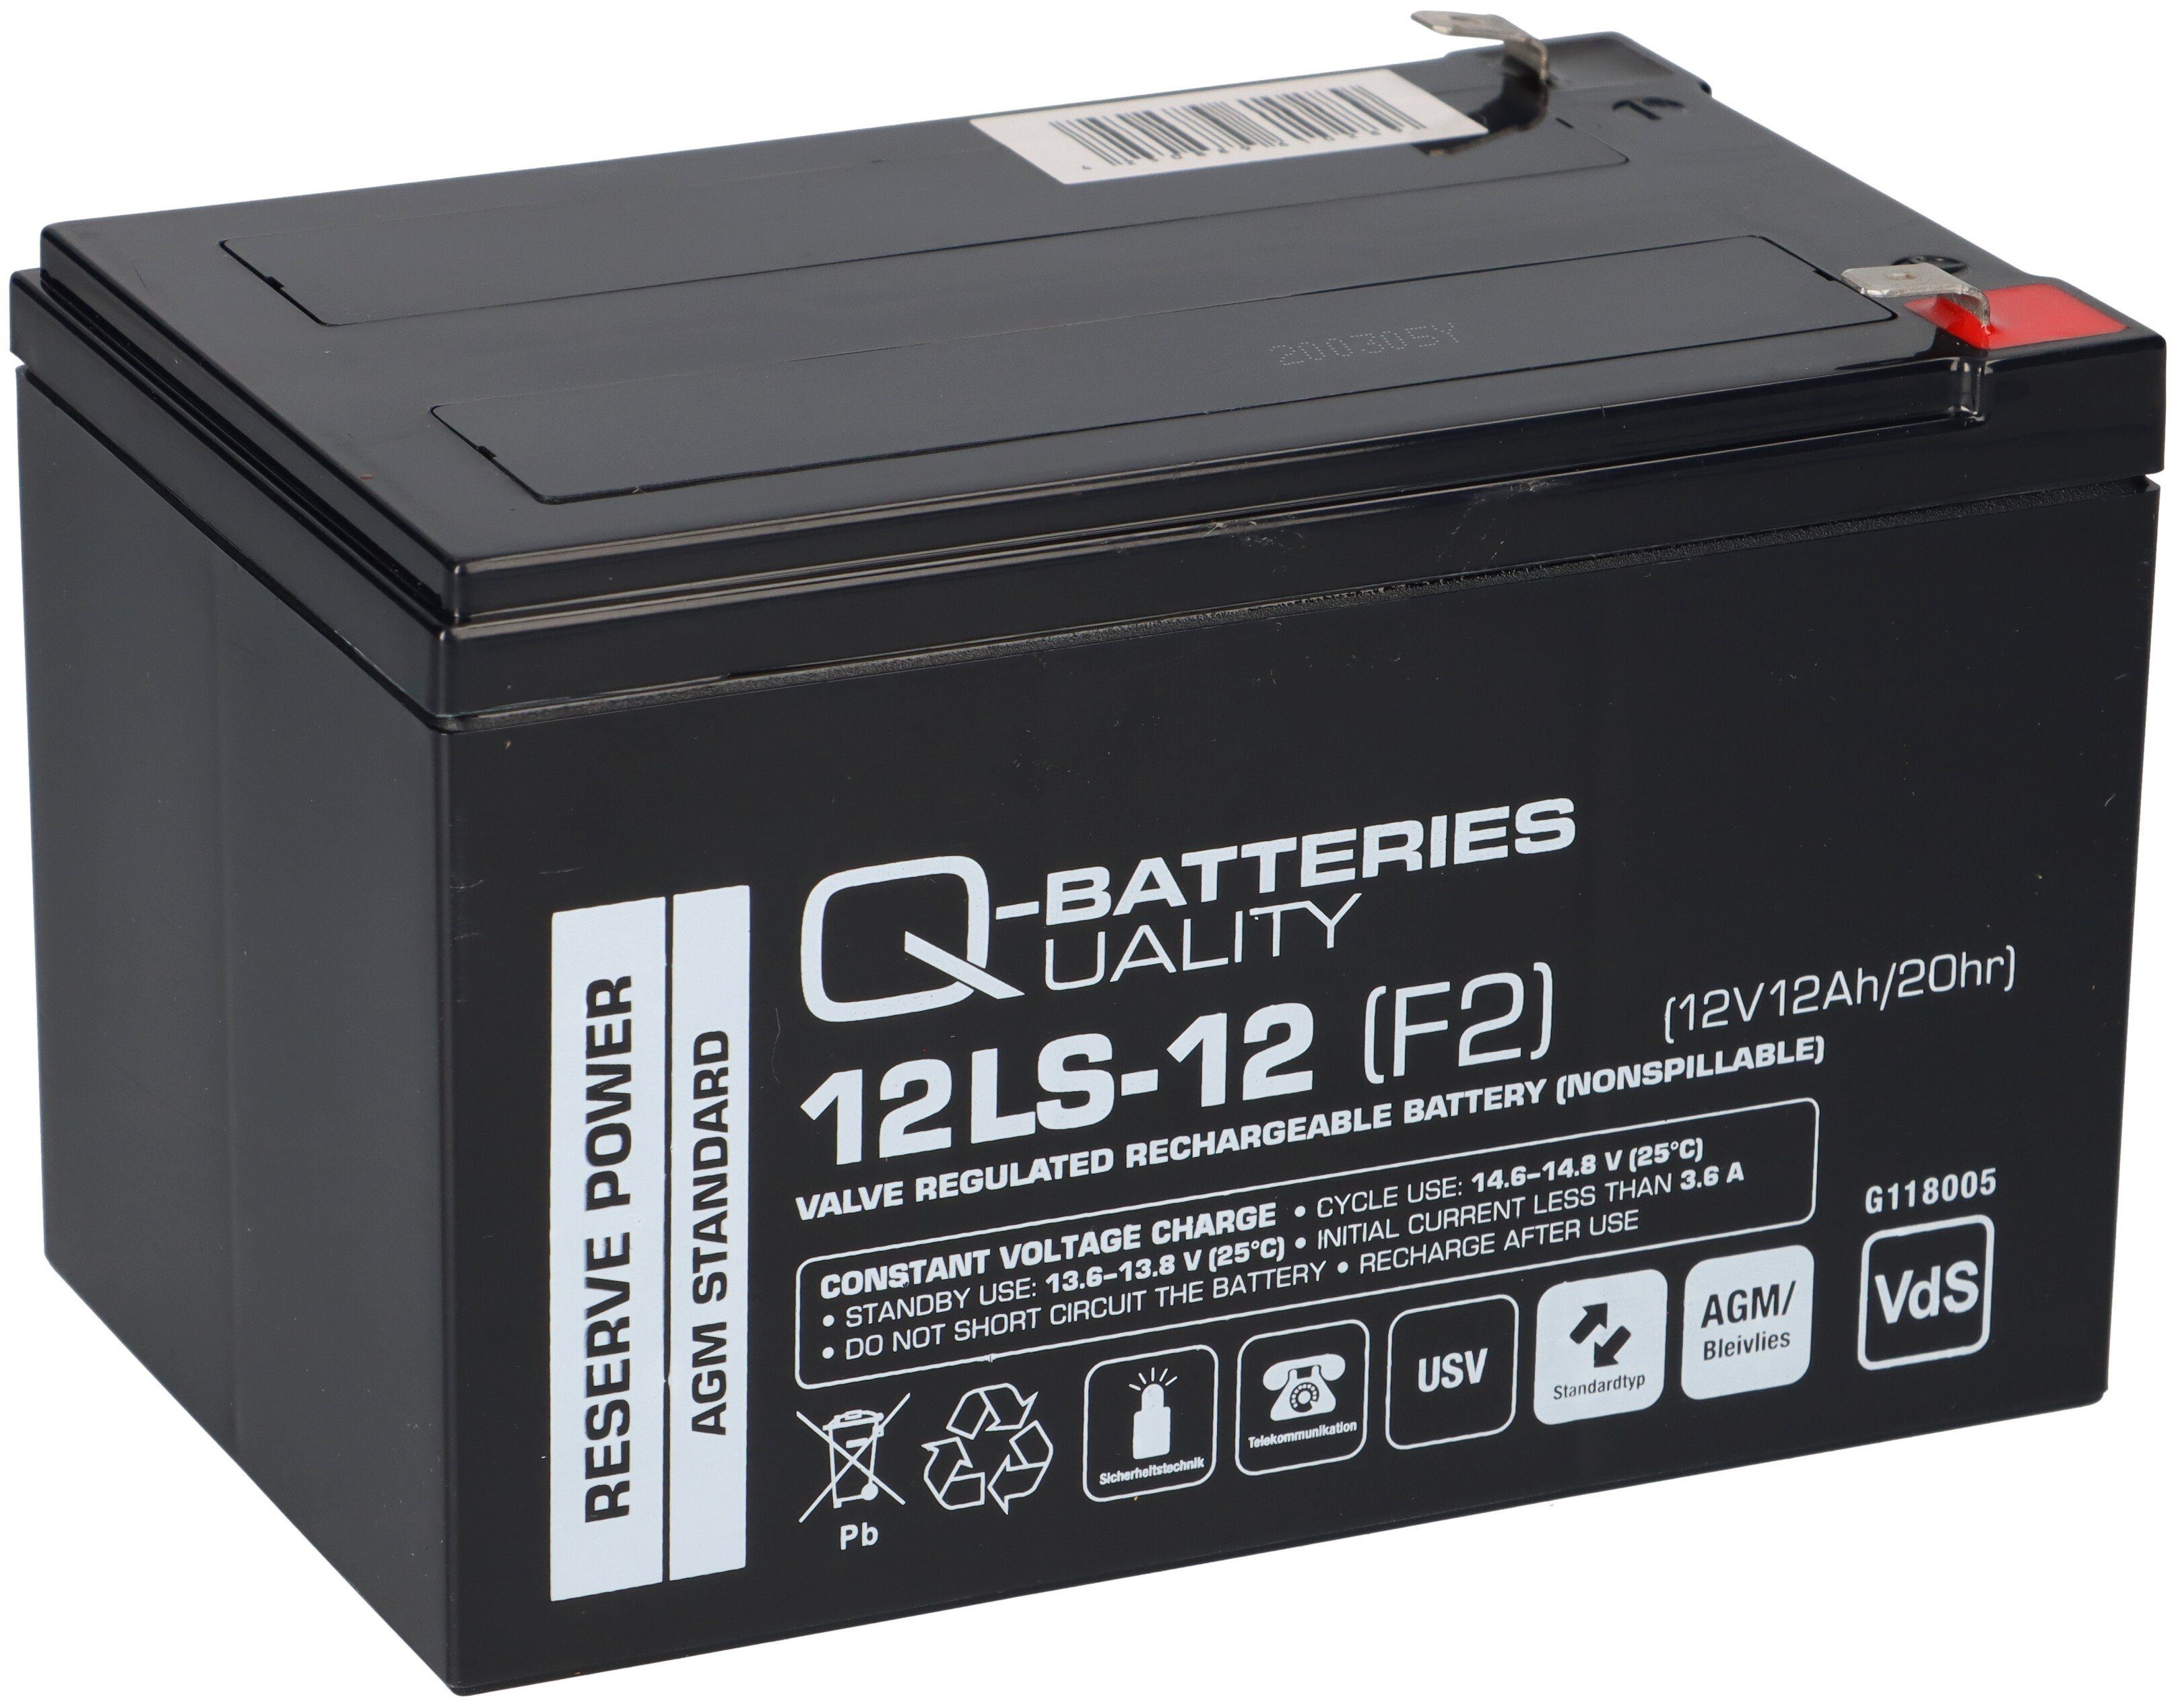 Q-Batteries Q-Batteries 12LS-12 F2 Blei-Vlies-Akku / 12Ah VRLA Bleiakkus AGM 12V mit VdS